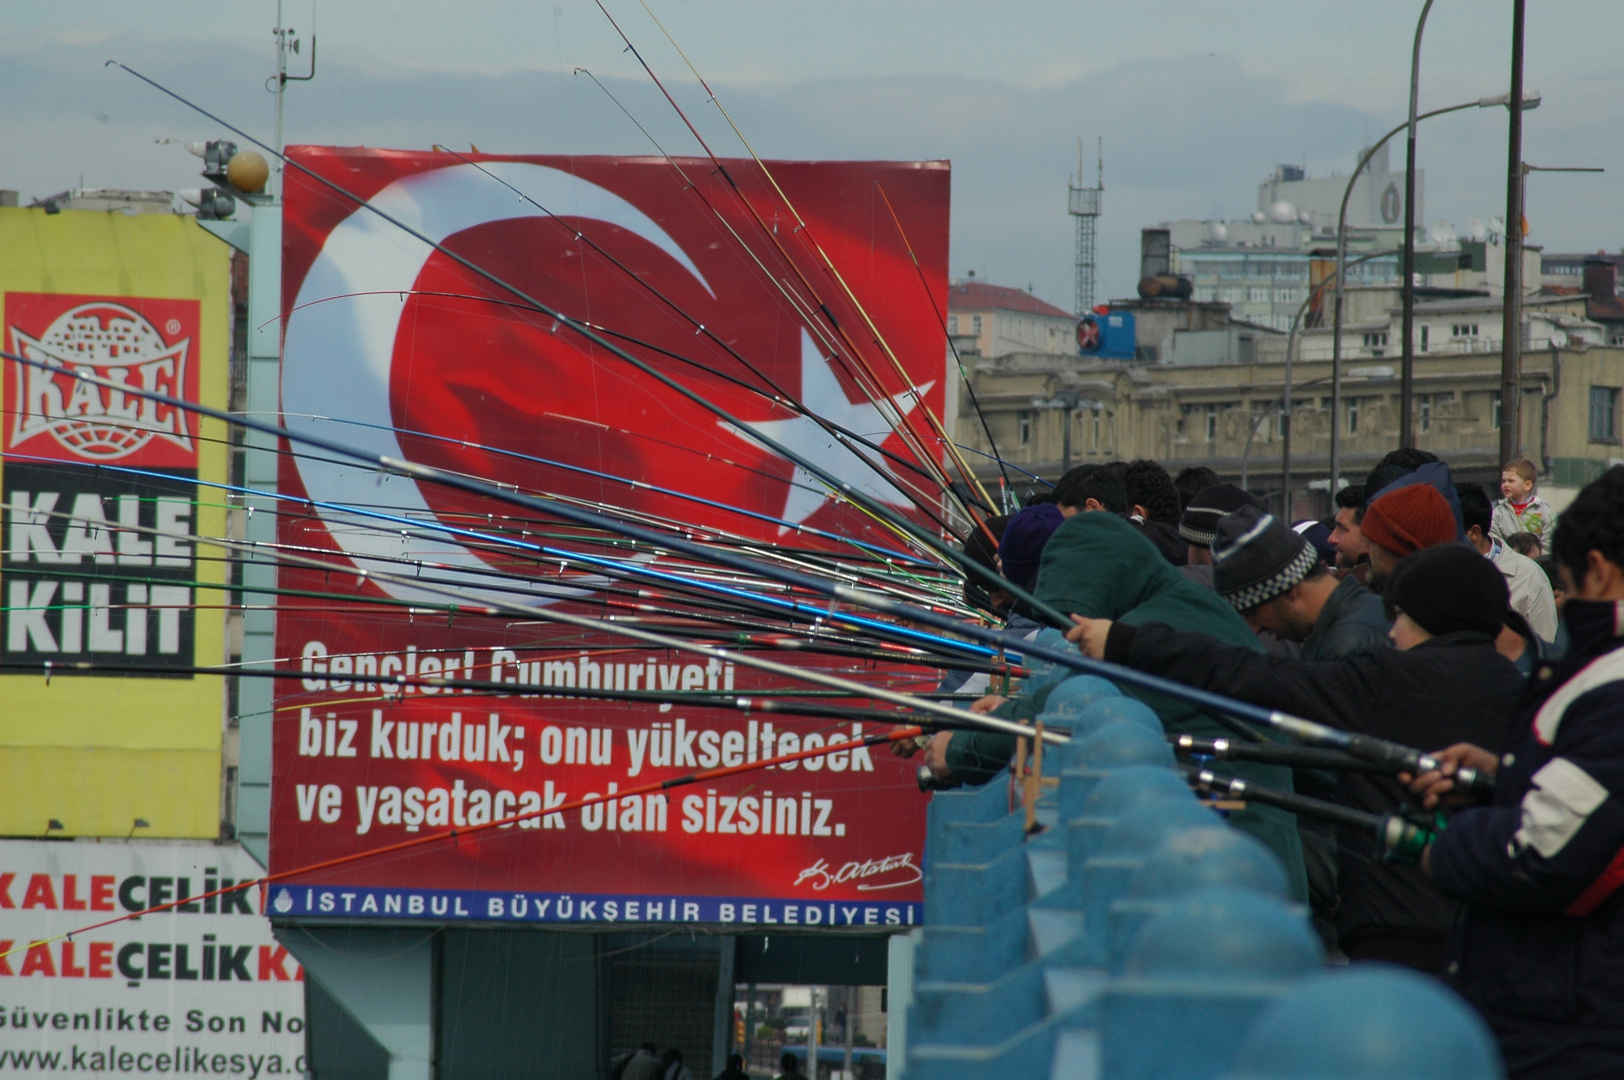 Freitagsangeln in Istanbul